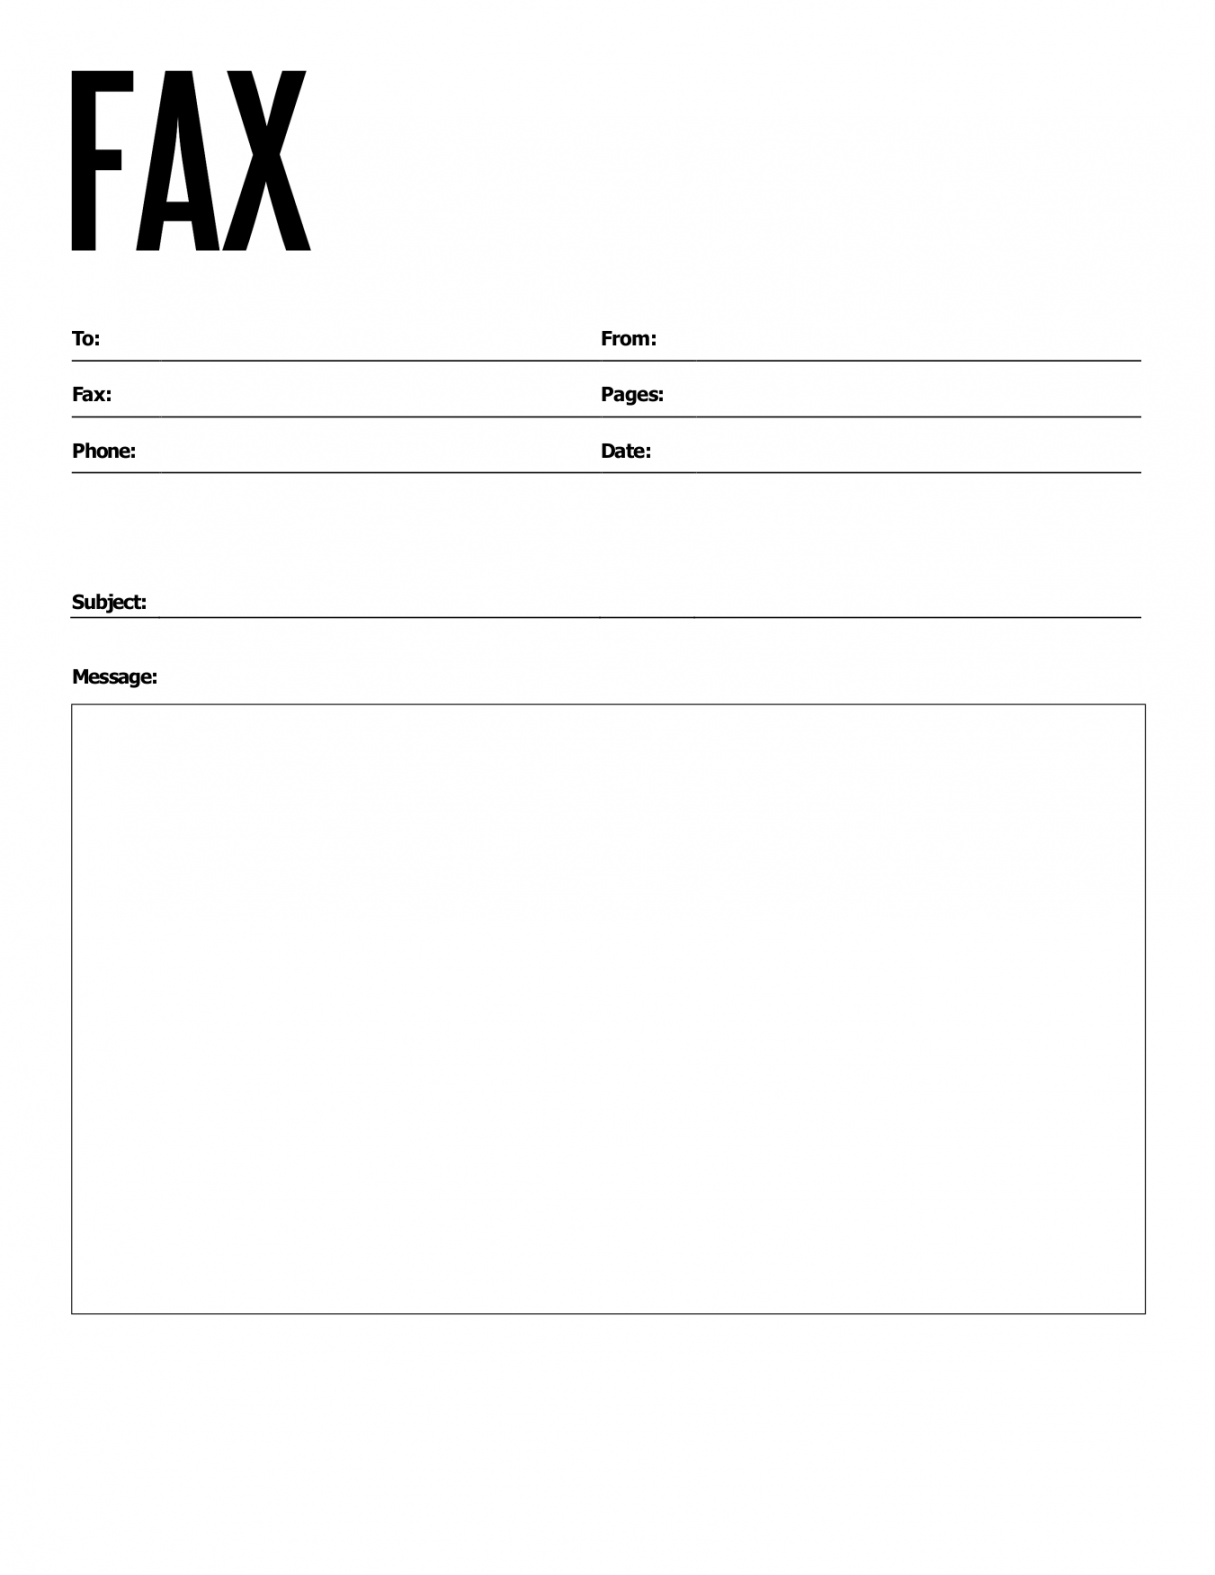 Free Fax Cover Sheet Printable - Printable - Free Fax Cover Sheets  FaxBurner